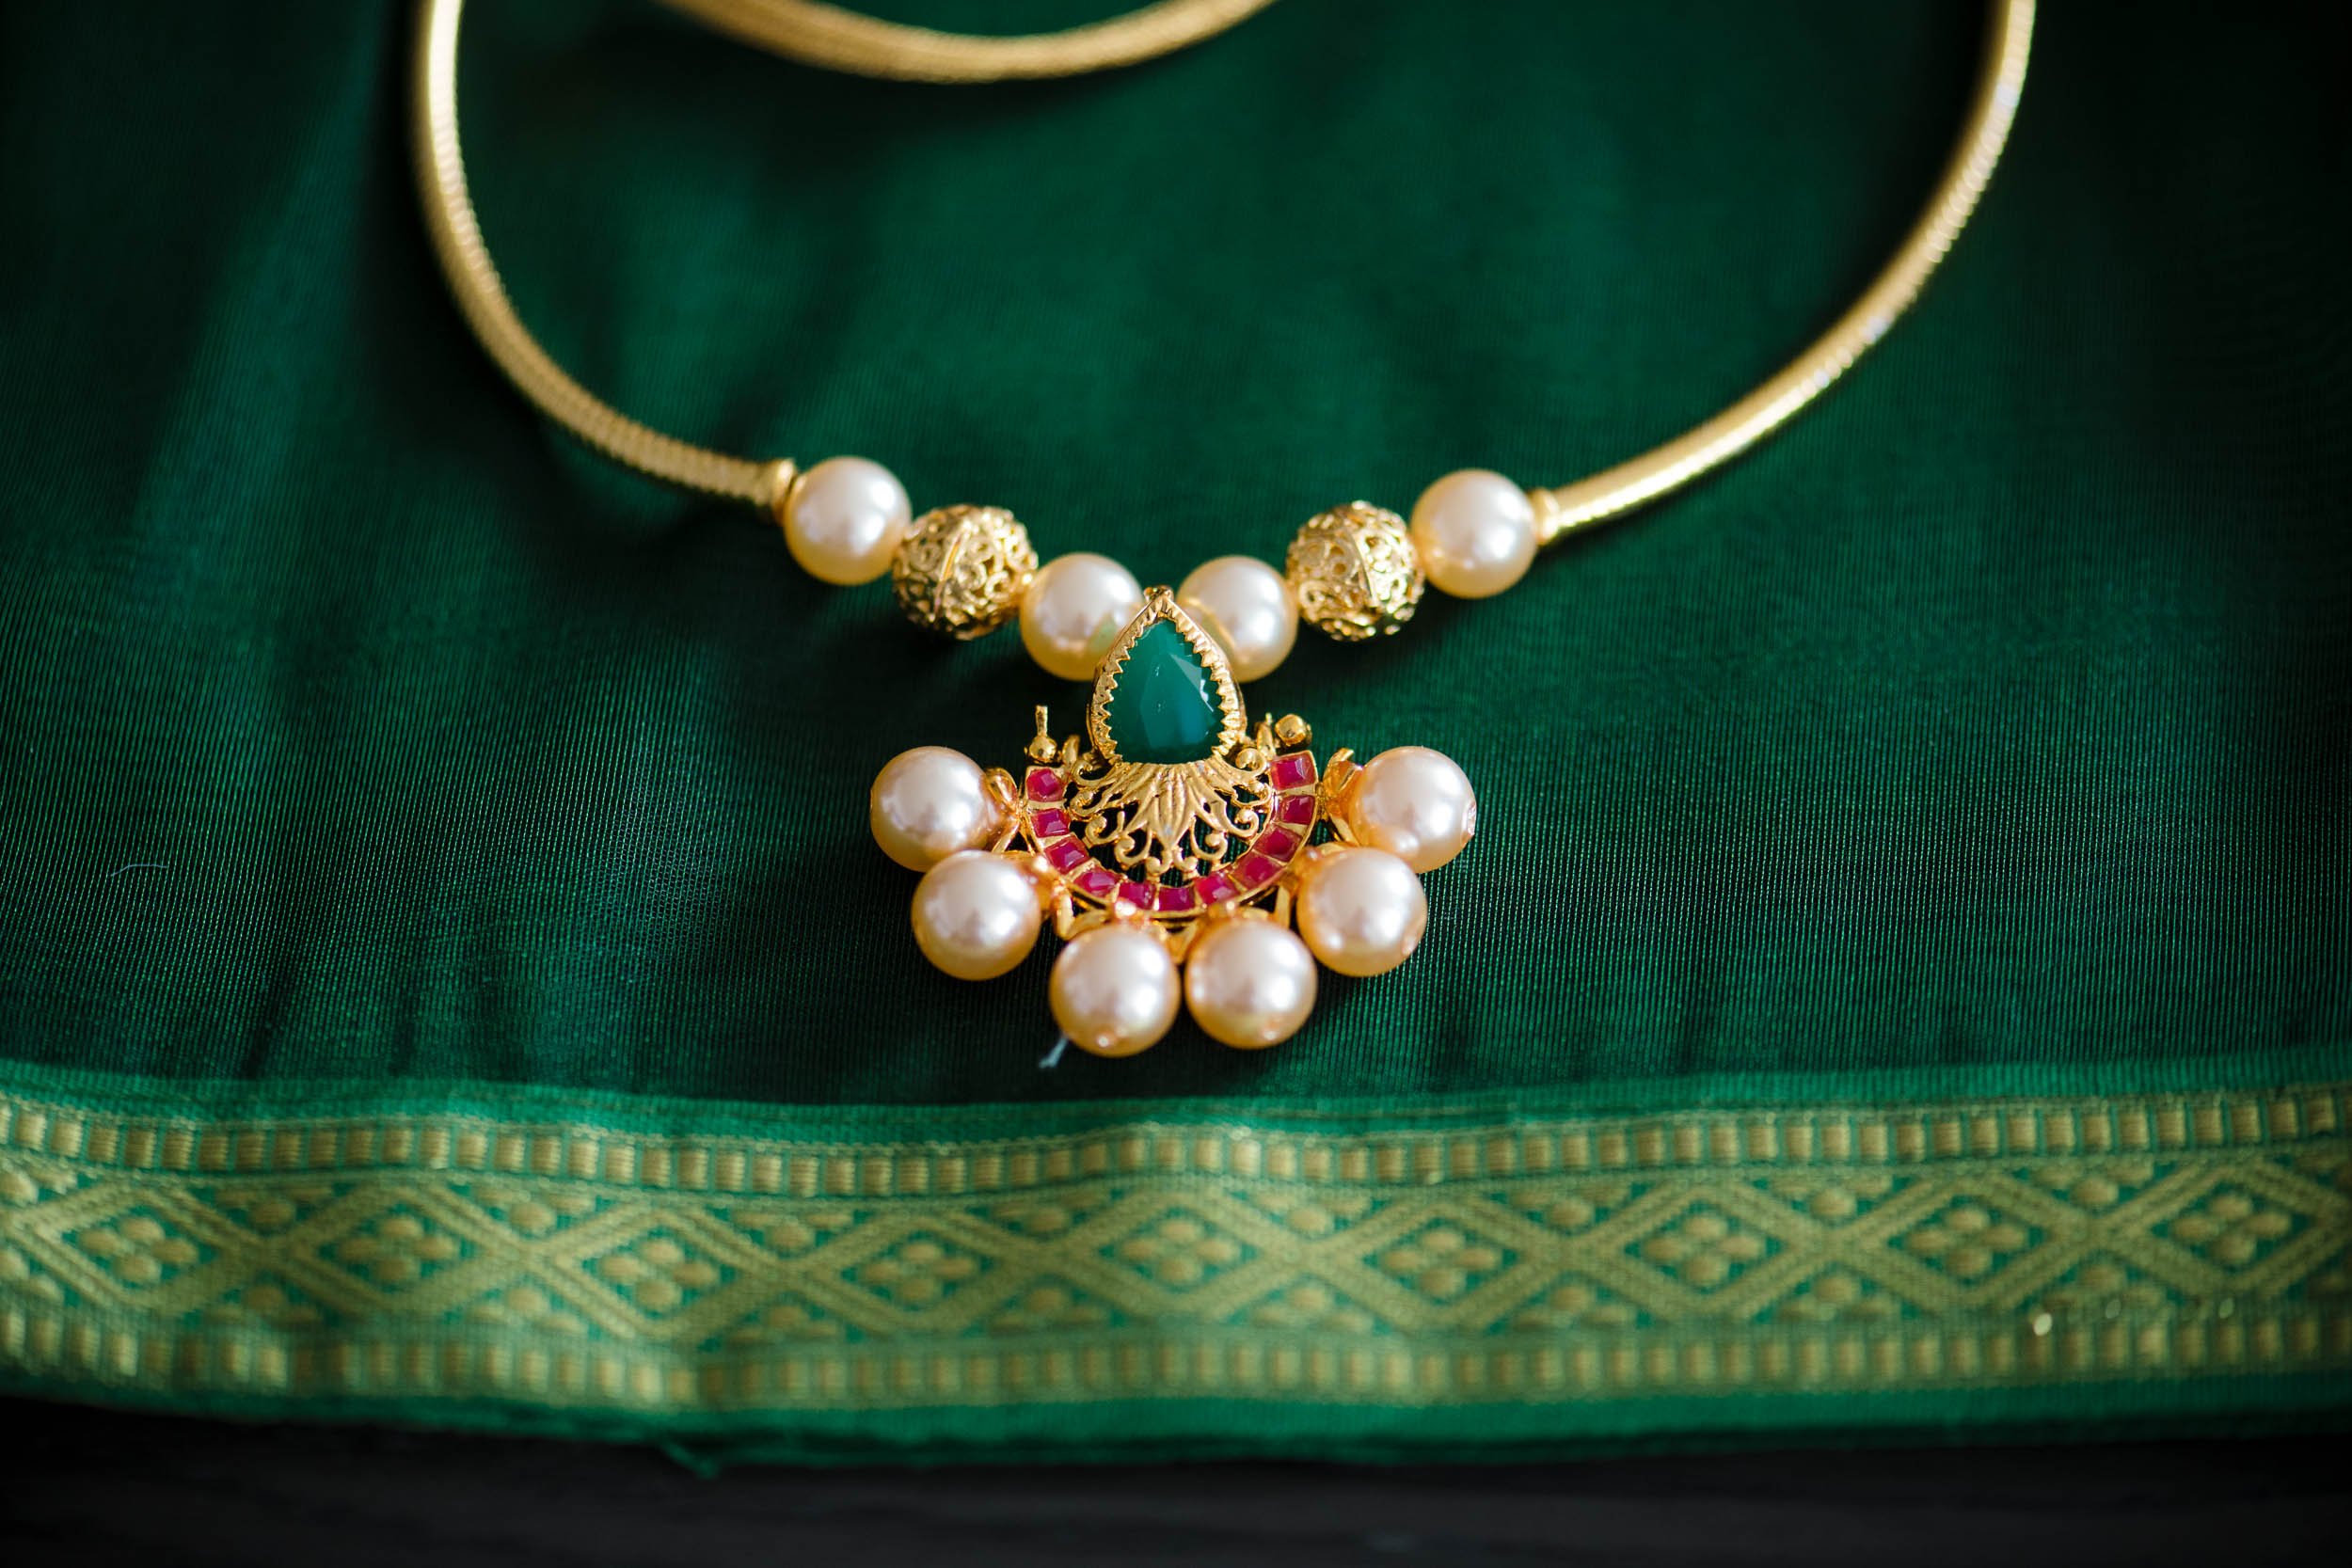 Indian Wedding Photographers | Renaissance Schaumburg | J. Brown Photography | bridal jewelry detail photo.